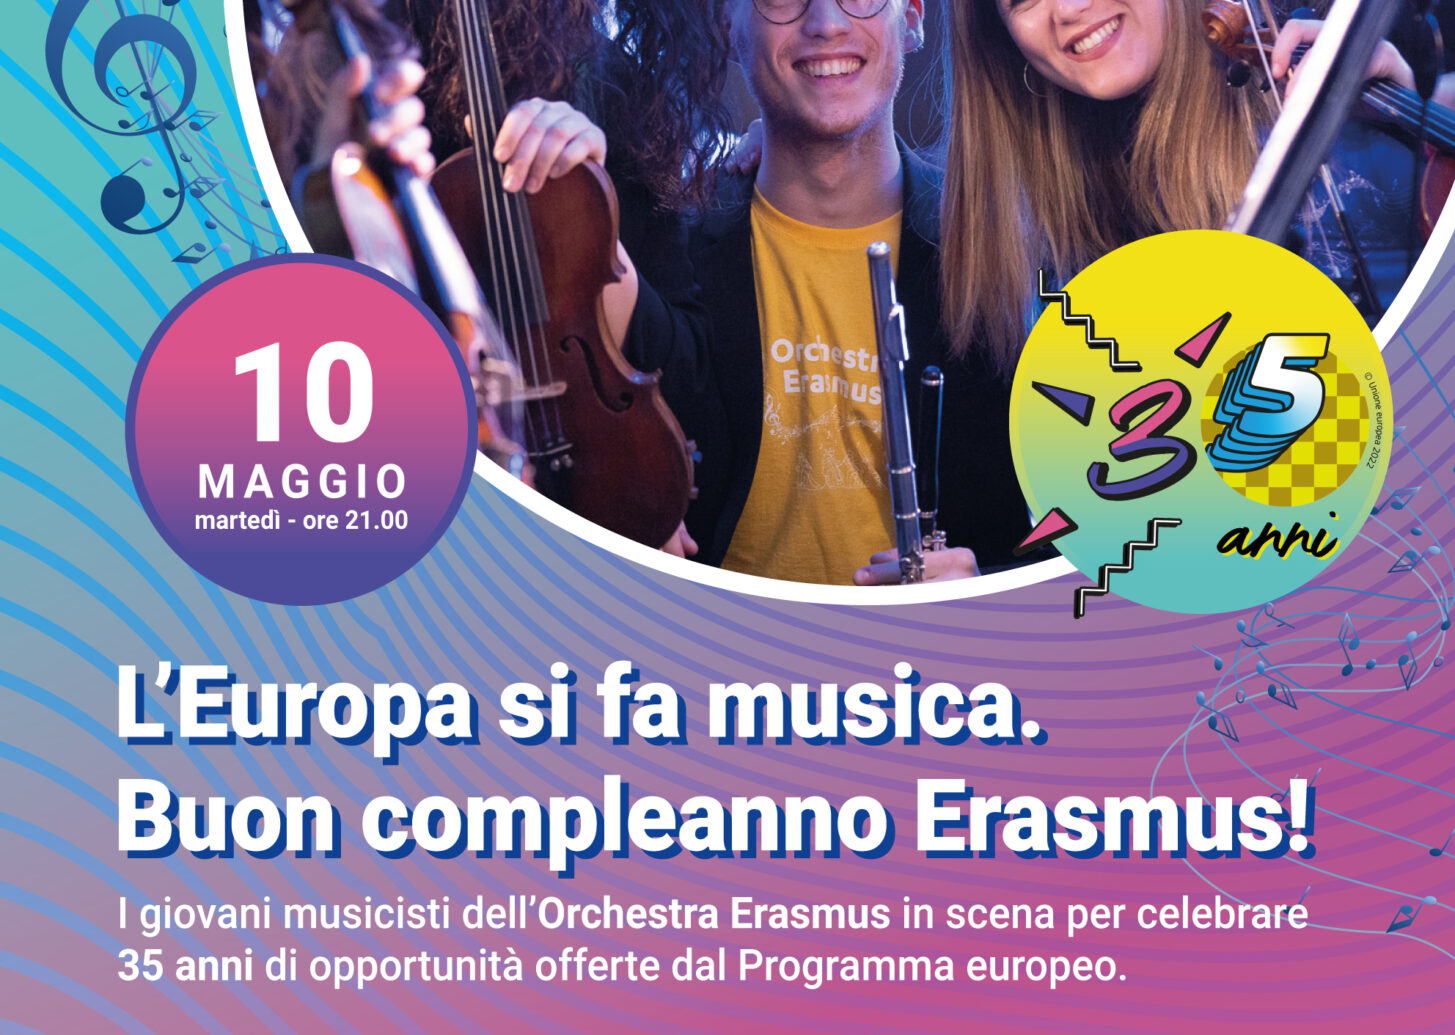 Europe becomes music. Happy birthday Erasmus!